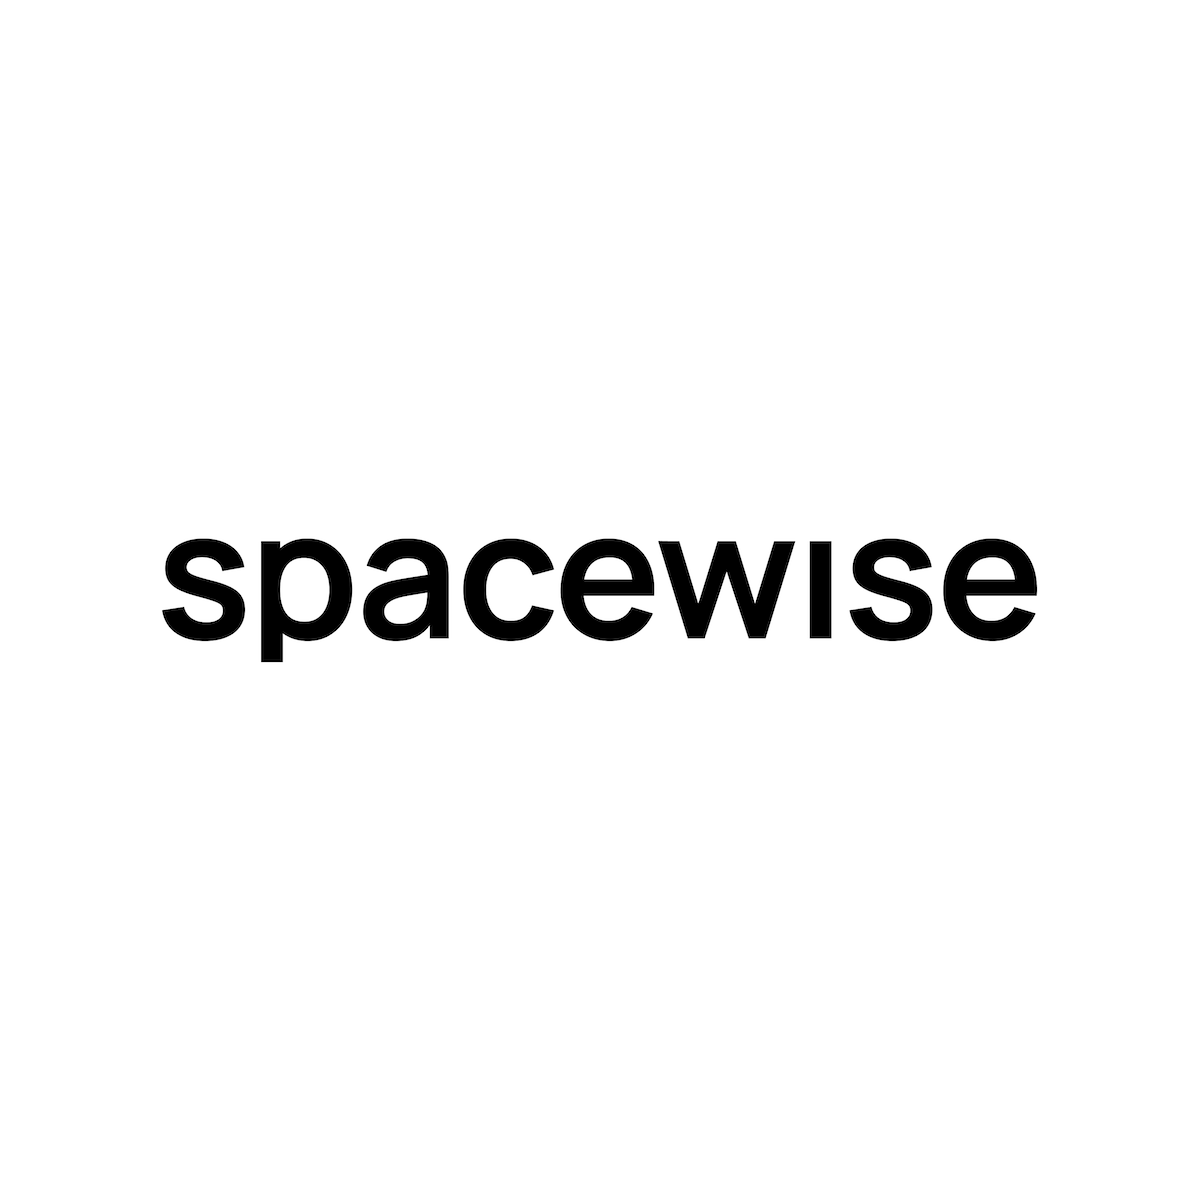 Spacewise logo